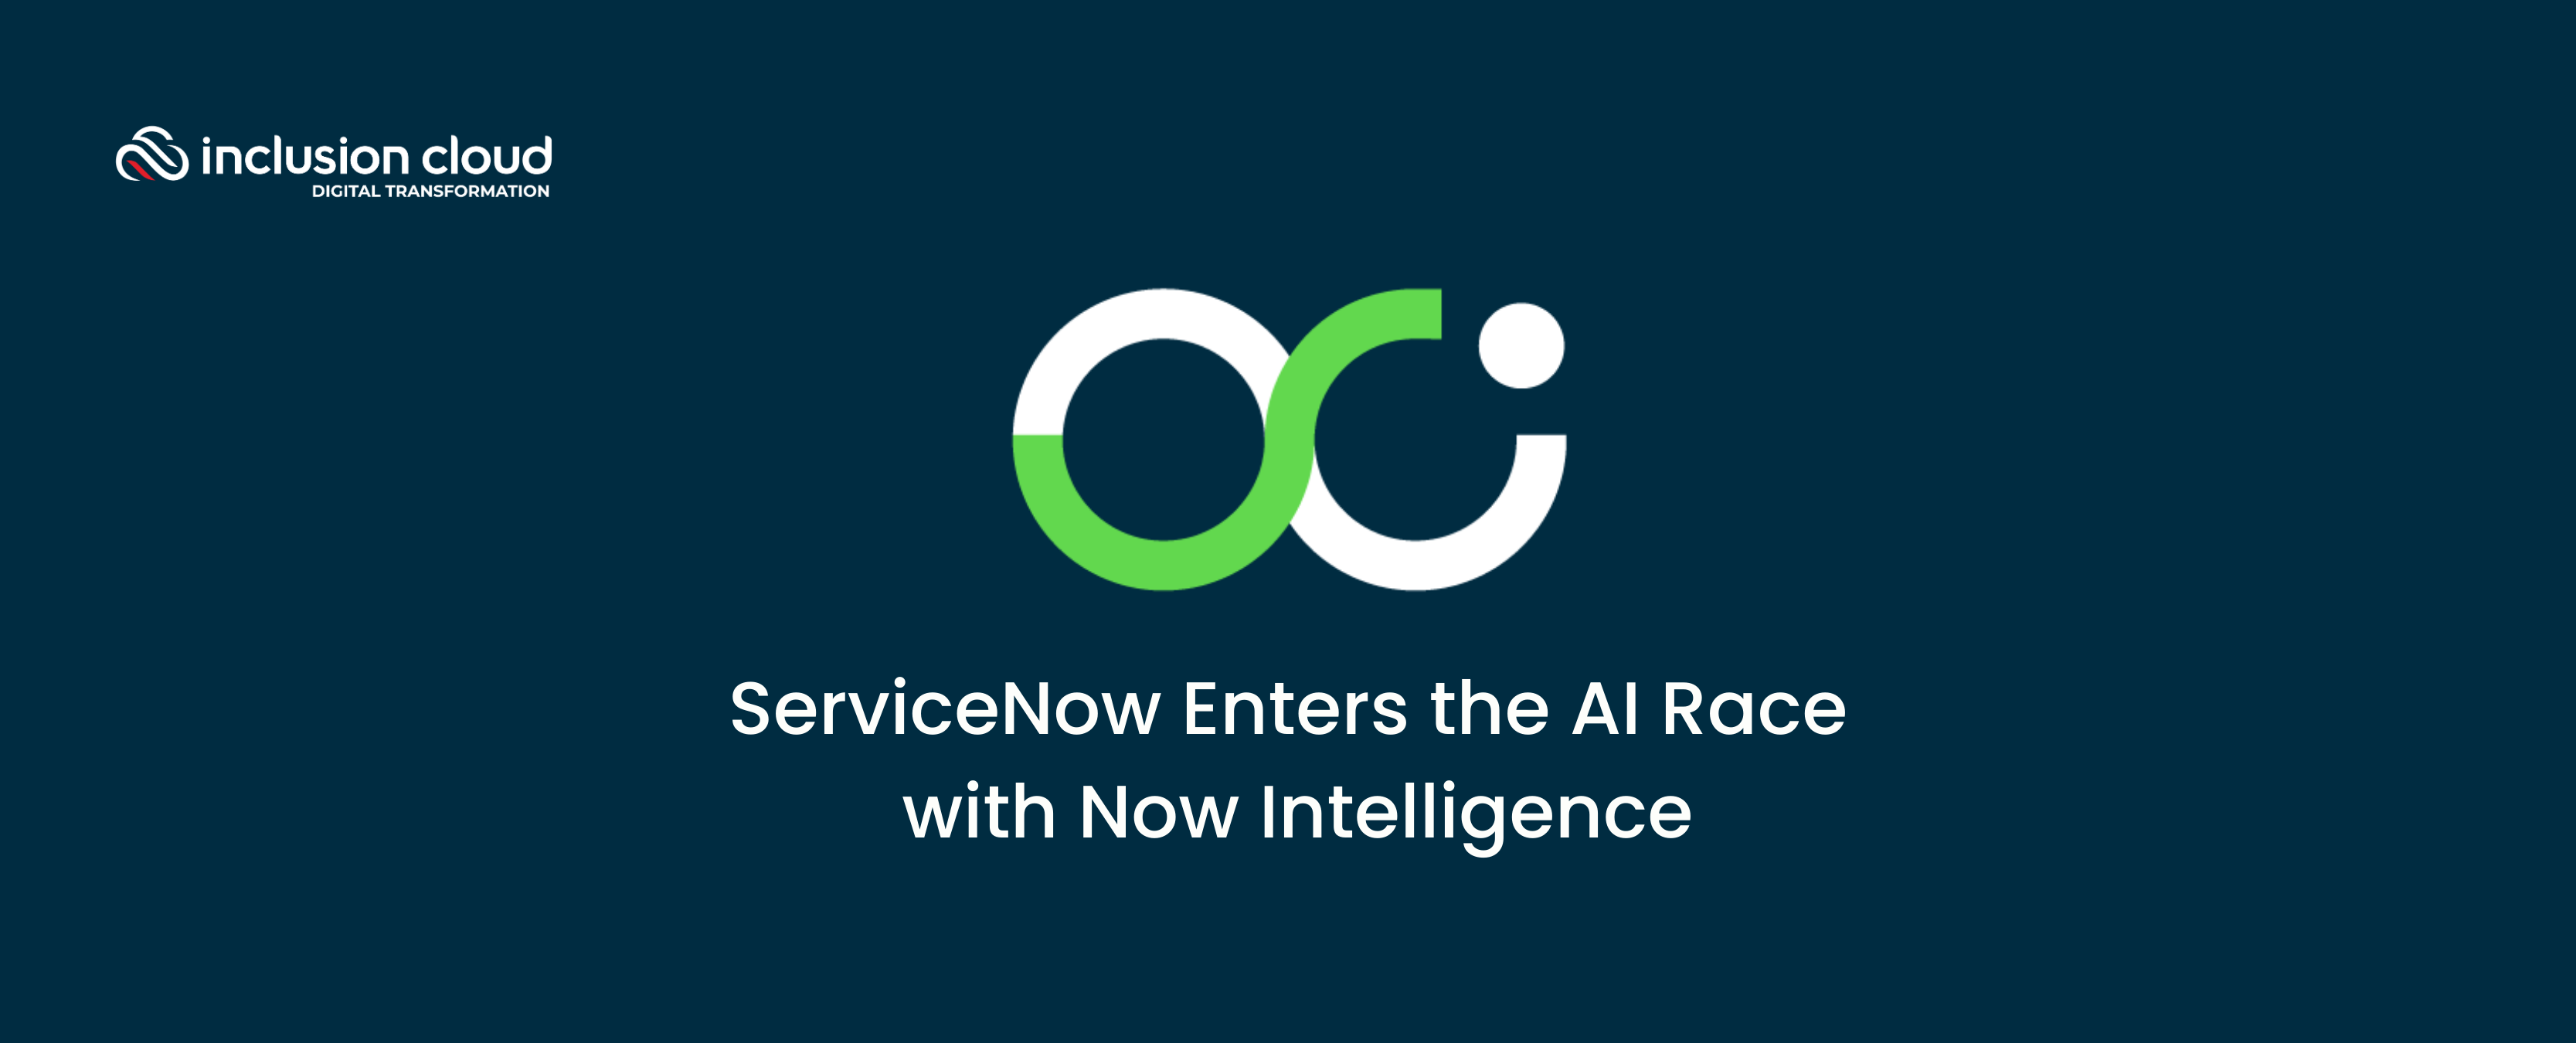 Now Intelligence - ServiceNow